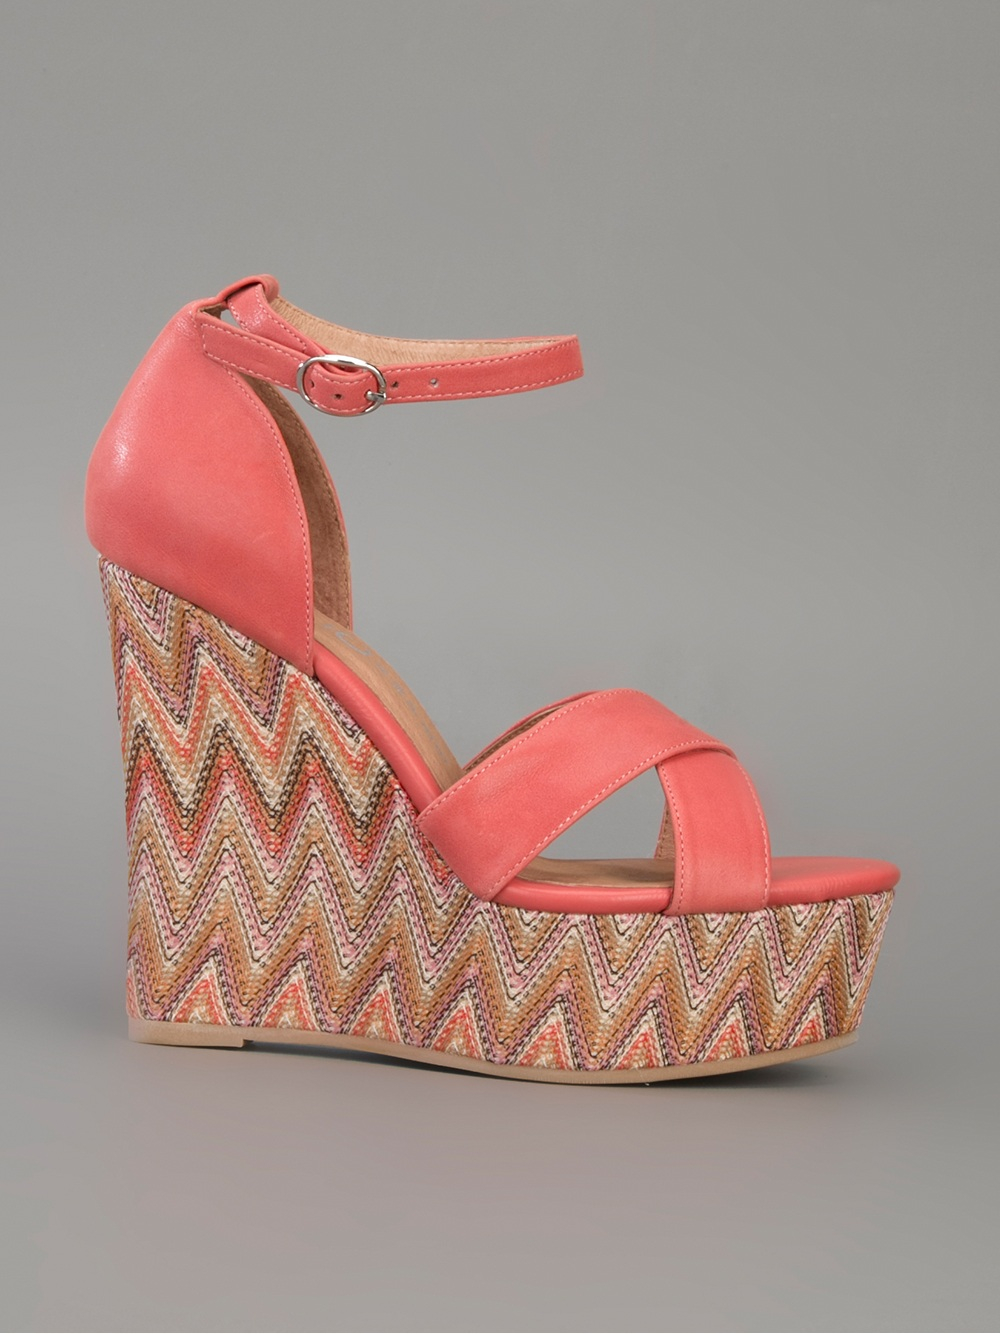 Jeffrey Campbell 'Bradshaw' Wedge Sandal in Pink - Lyst